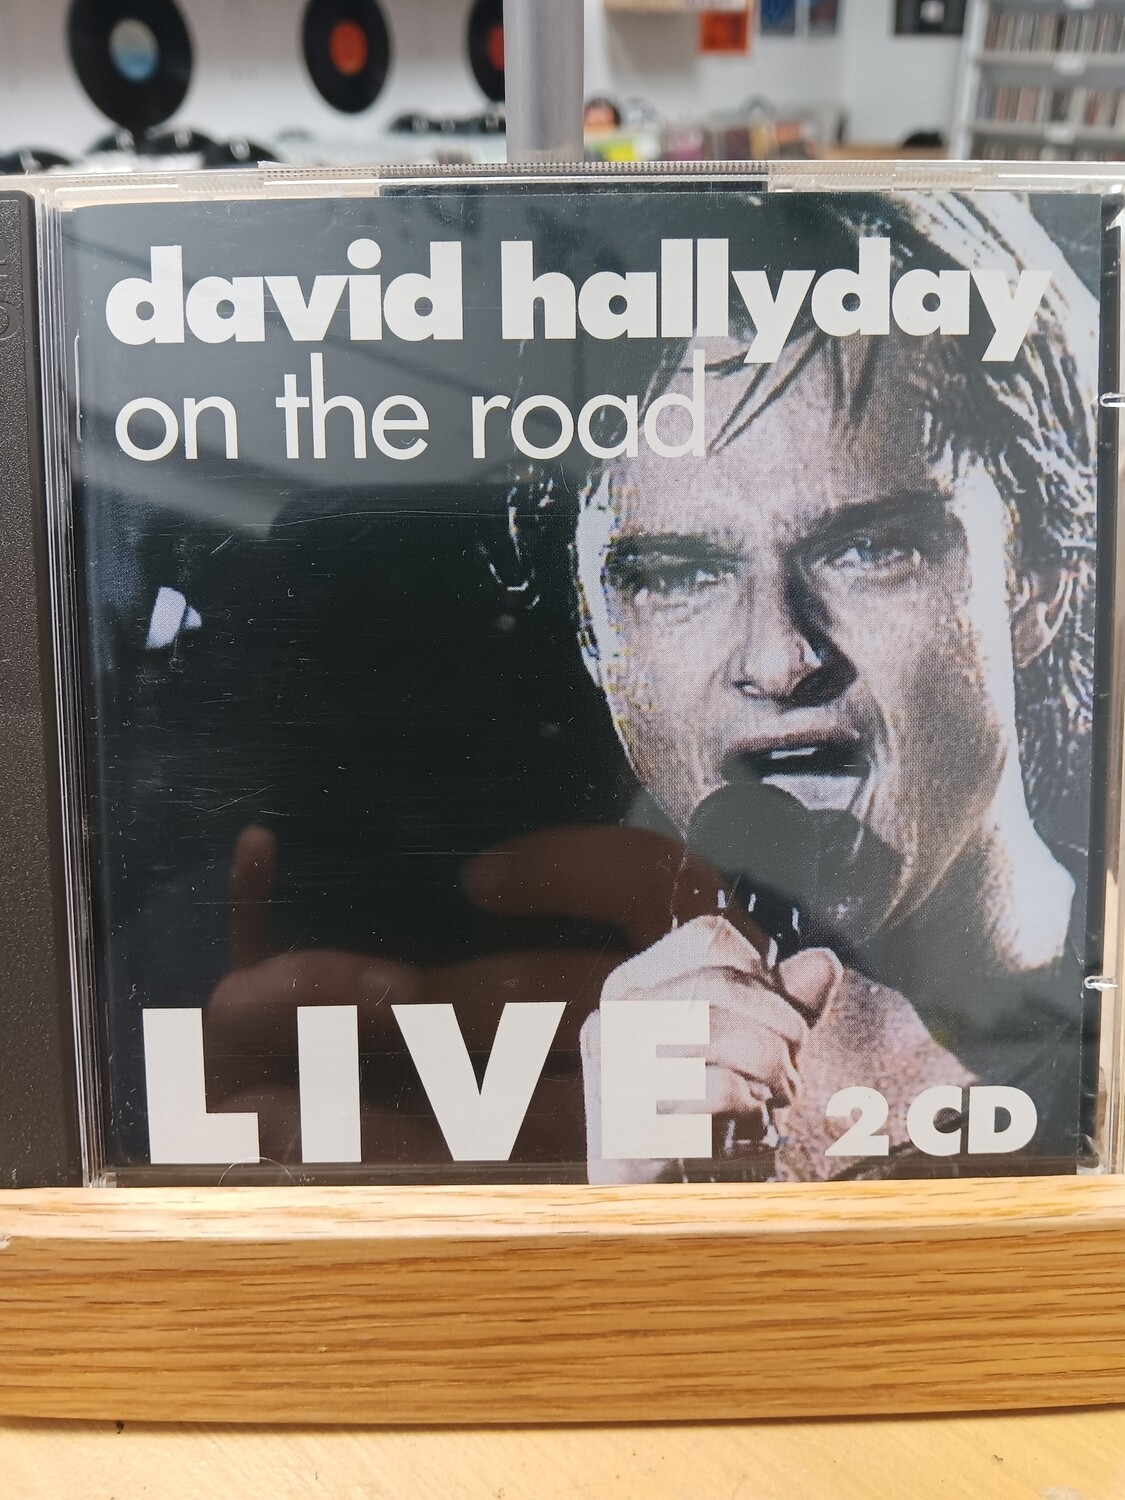 David Hallyday - On the road Live (CD)